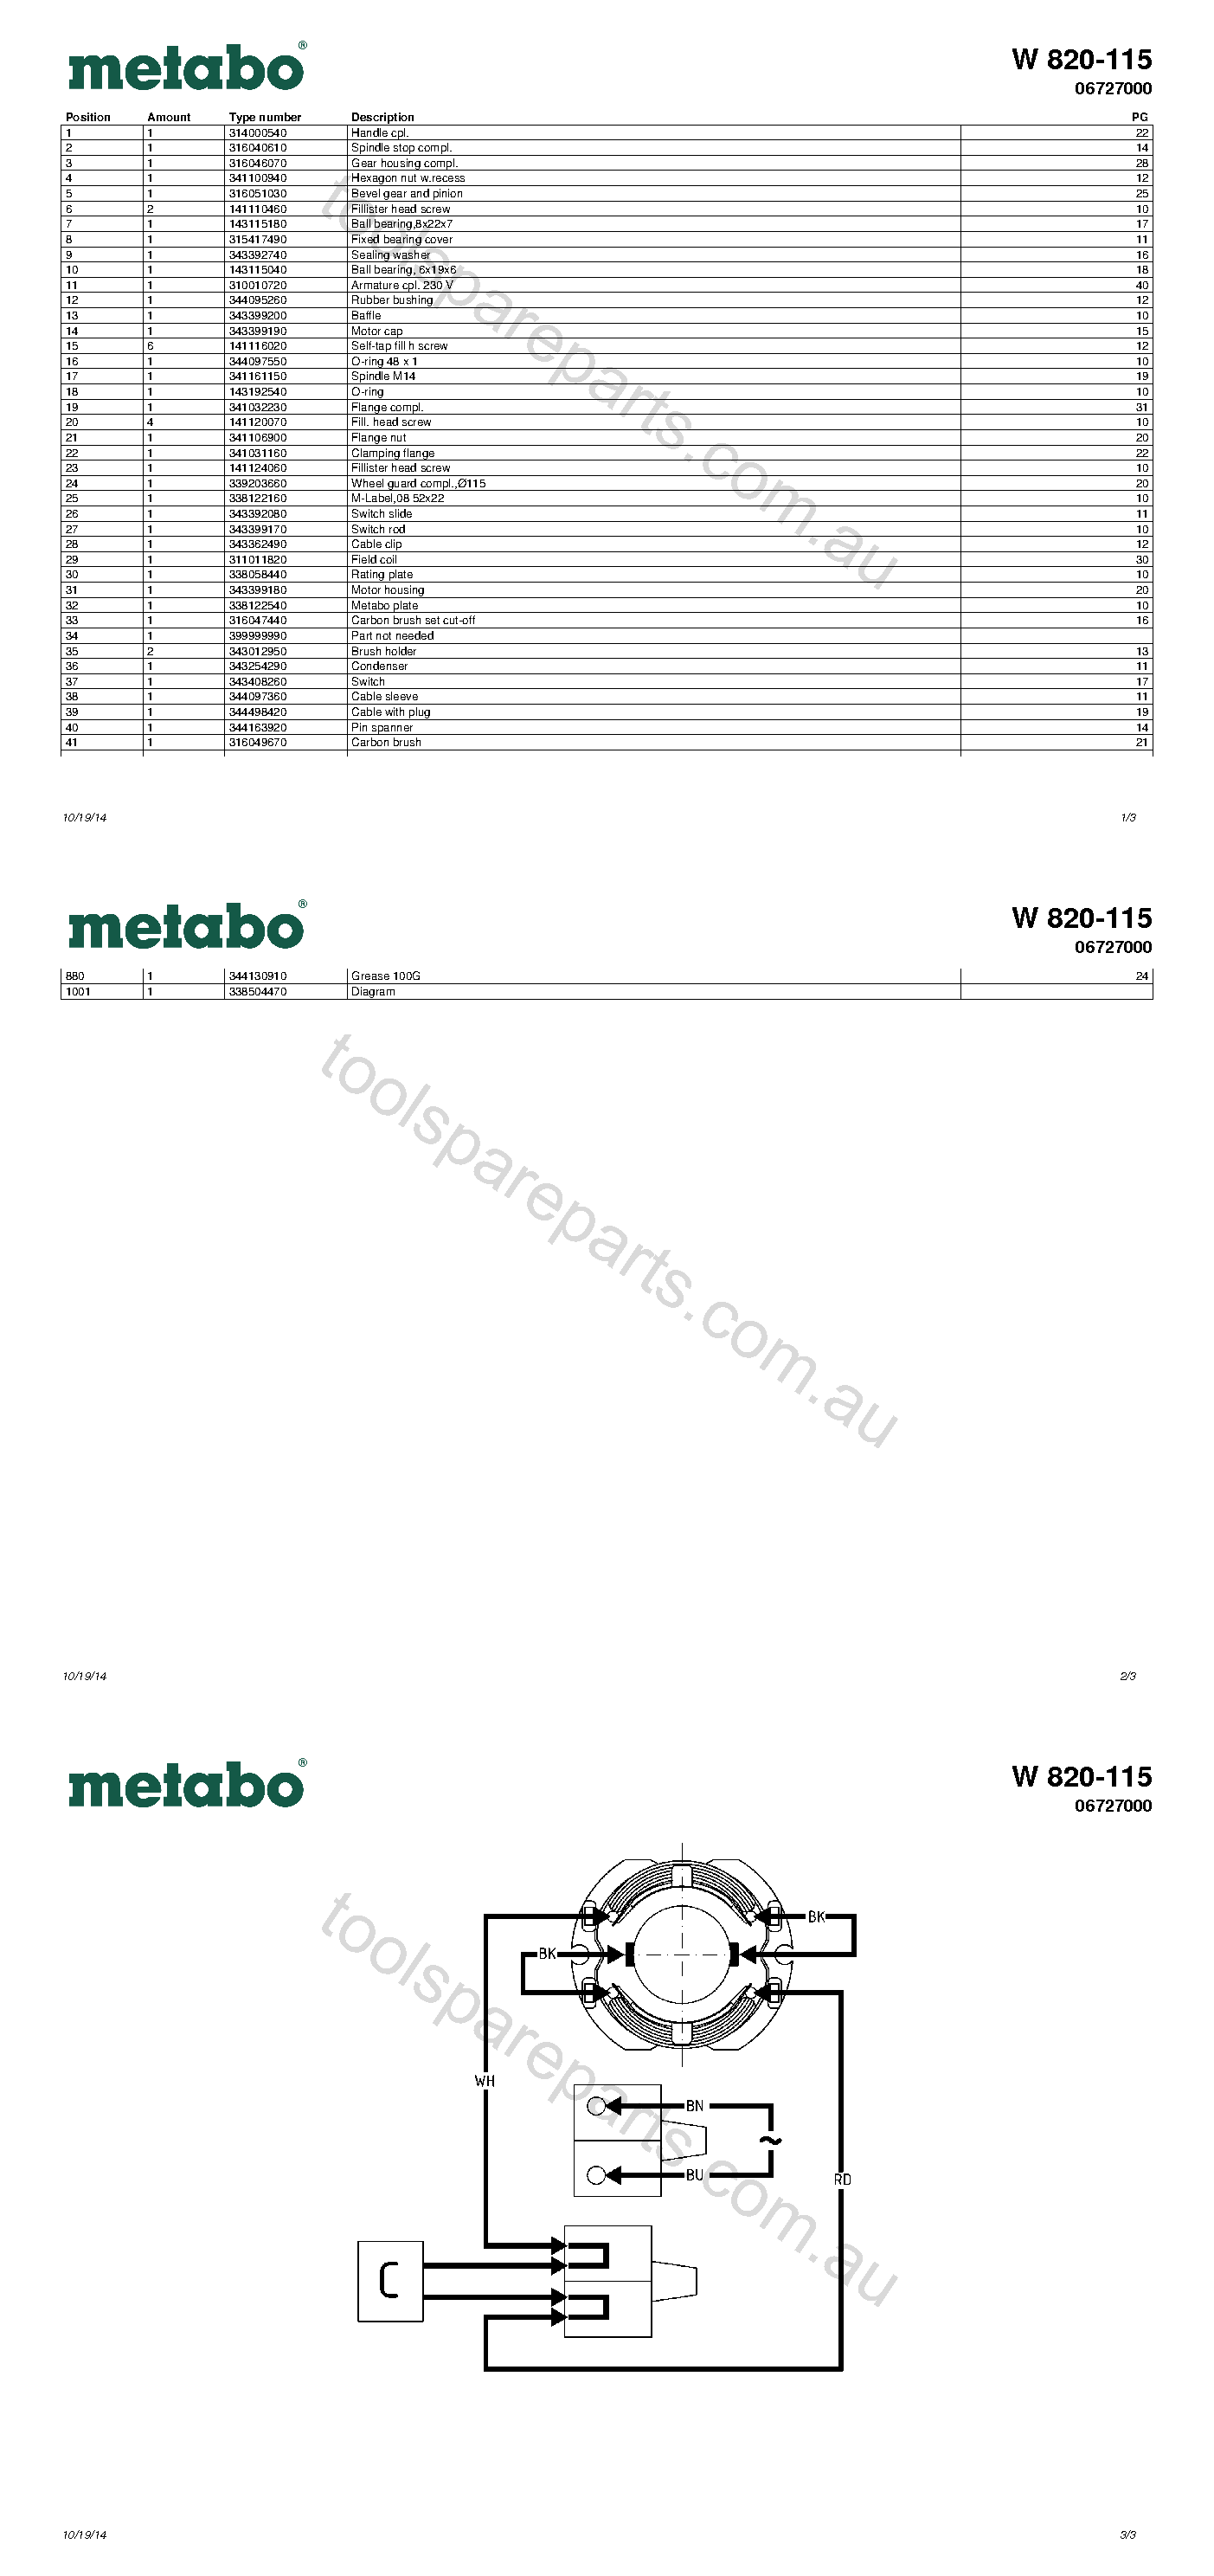 Metabo W 820-115 06727000  Diagram 1